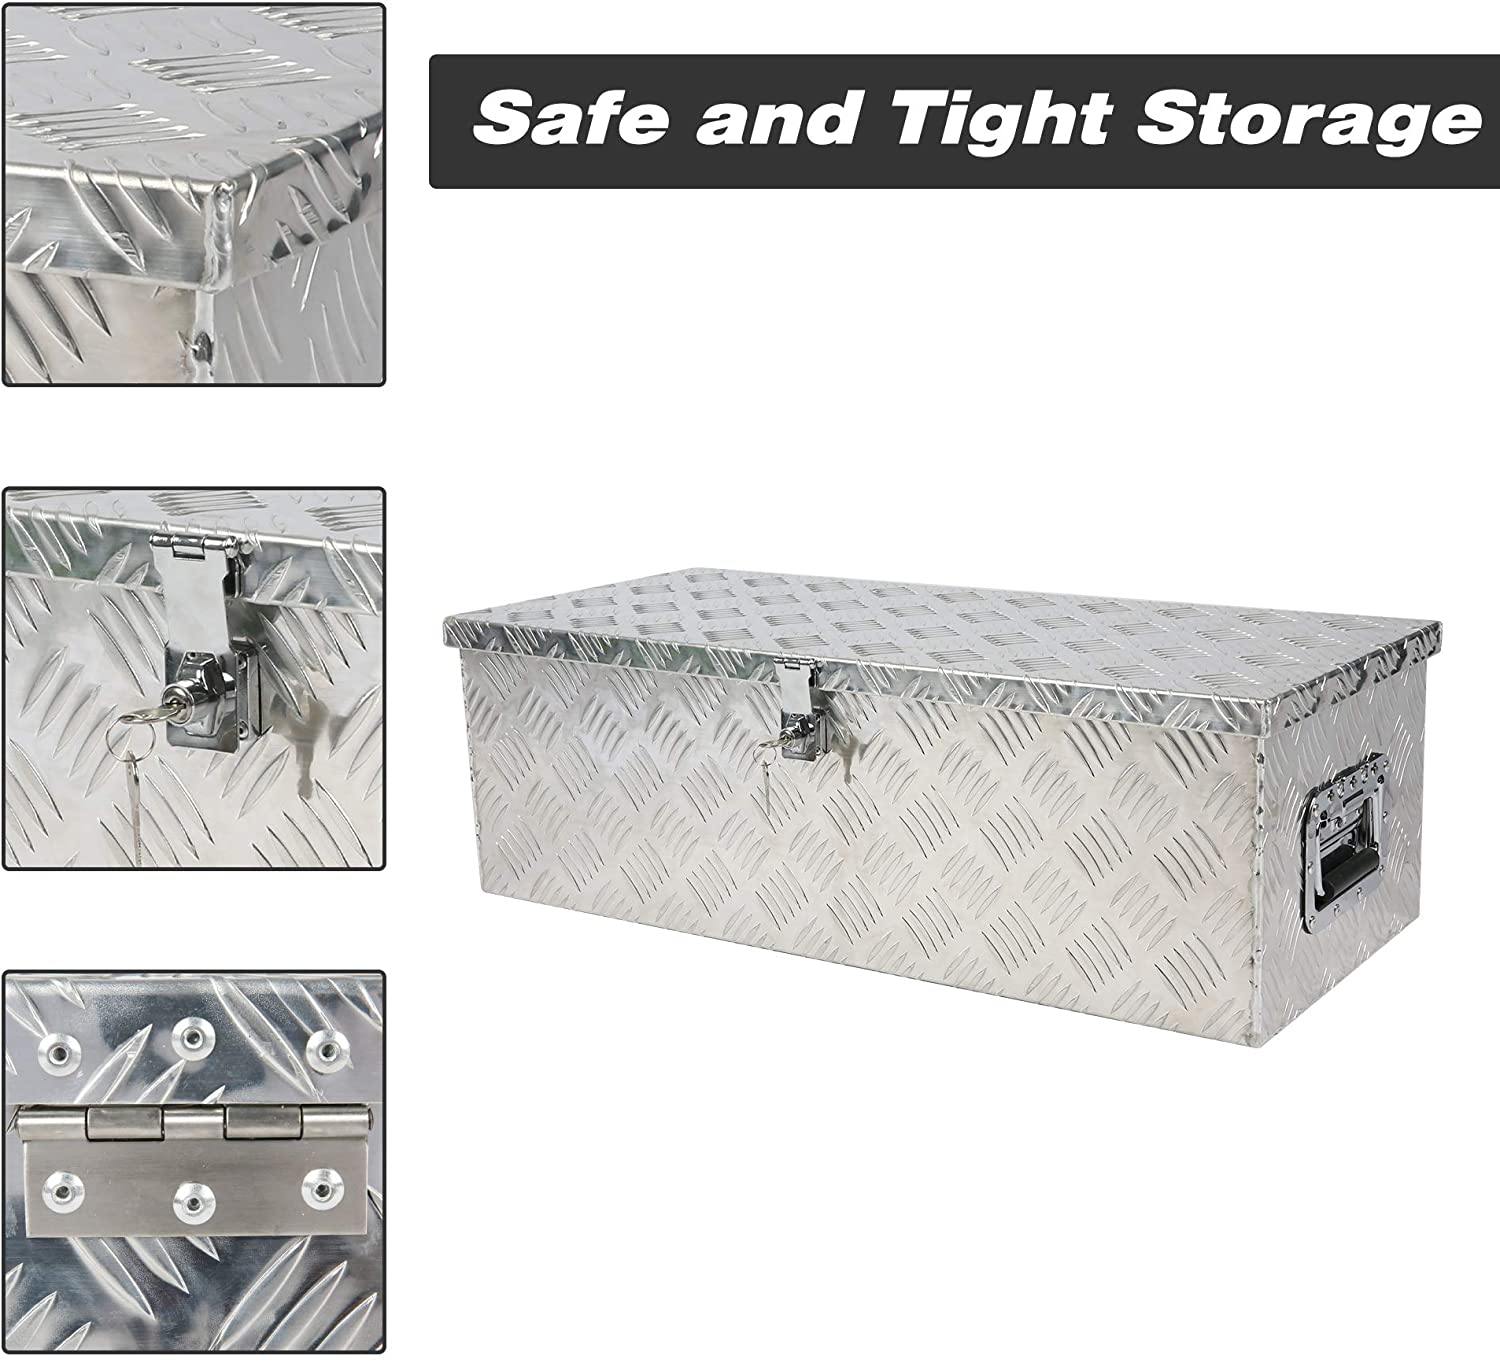 30” x 13.5” Aluminum Tool Box, Truck Trailer Pickup Tool Box w/Lock & Side Handles, Lightweight Truck Bed Storage Organizer w/2 Keys, Silver - Bosonshop